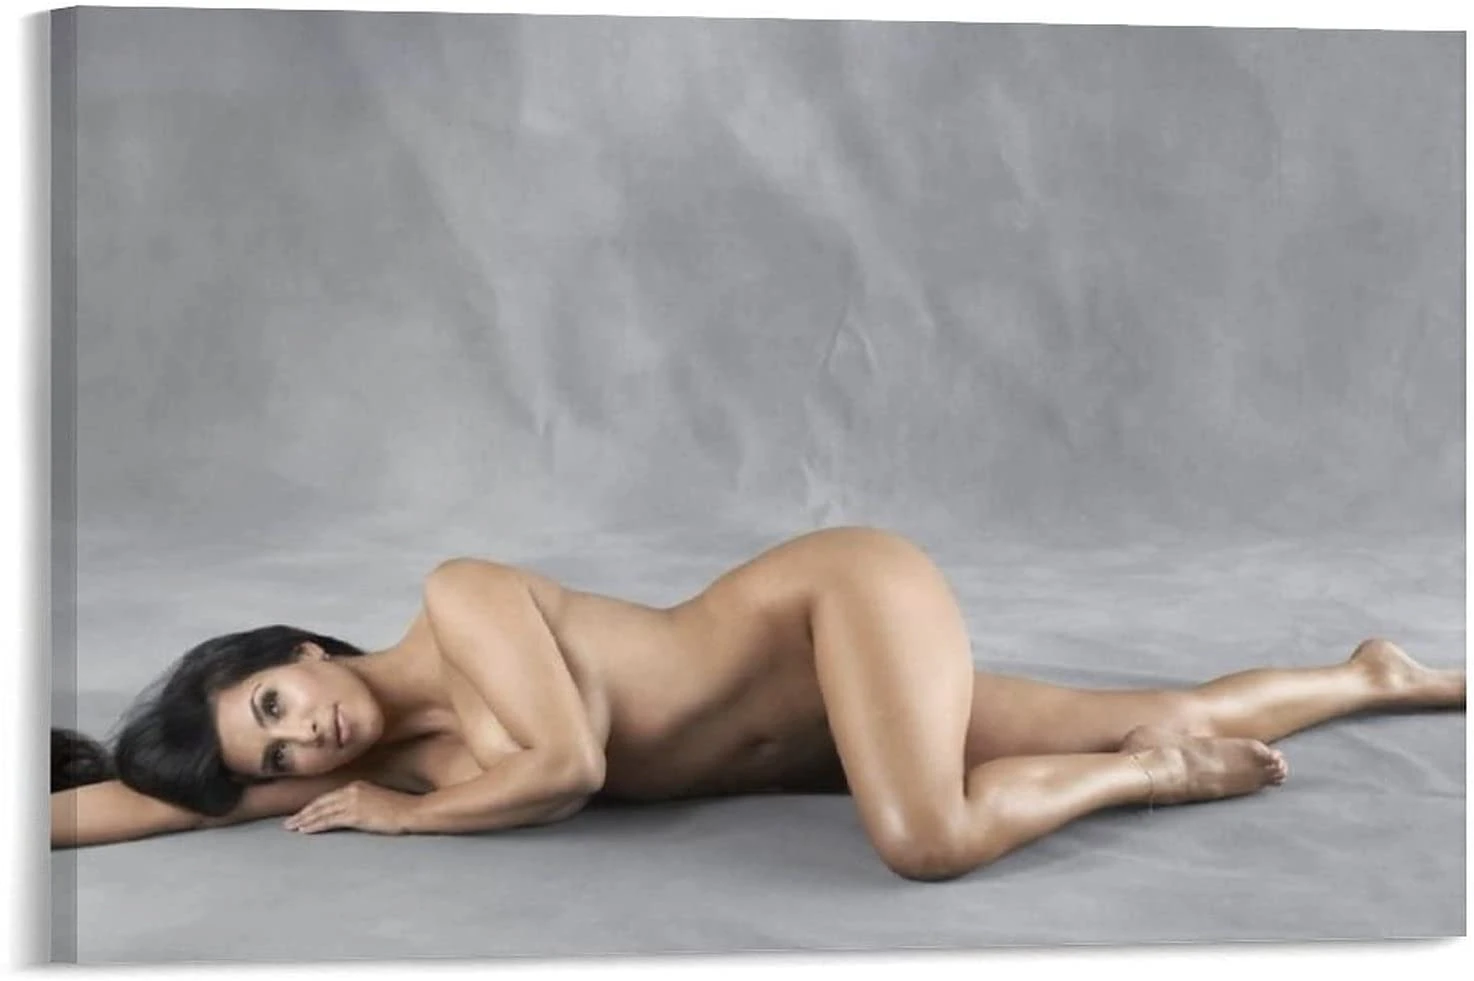 Kim wall nude